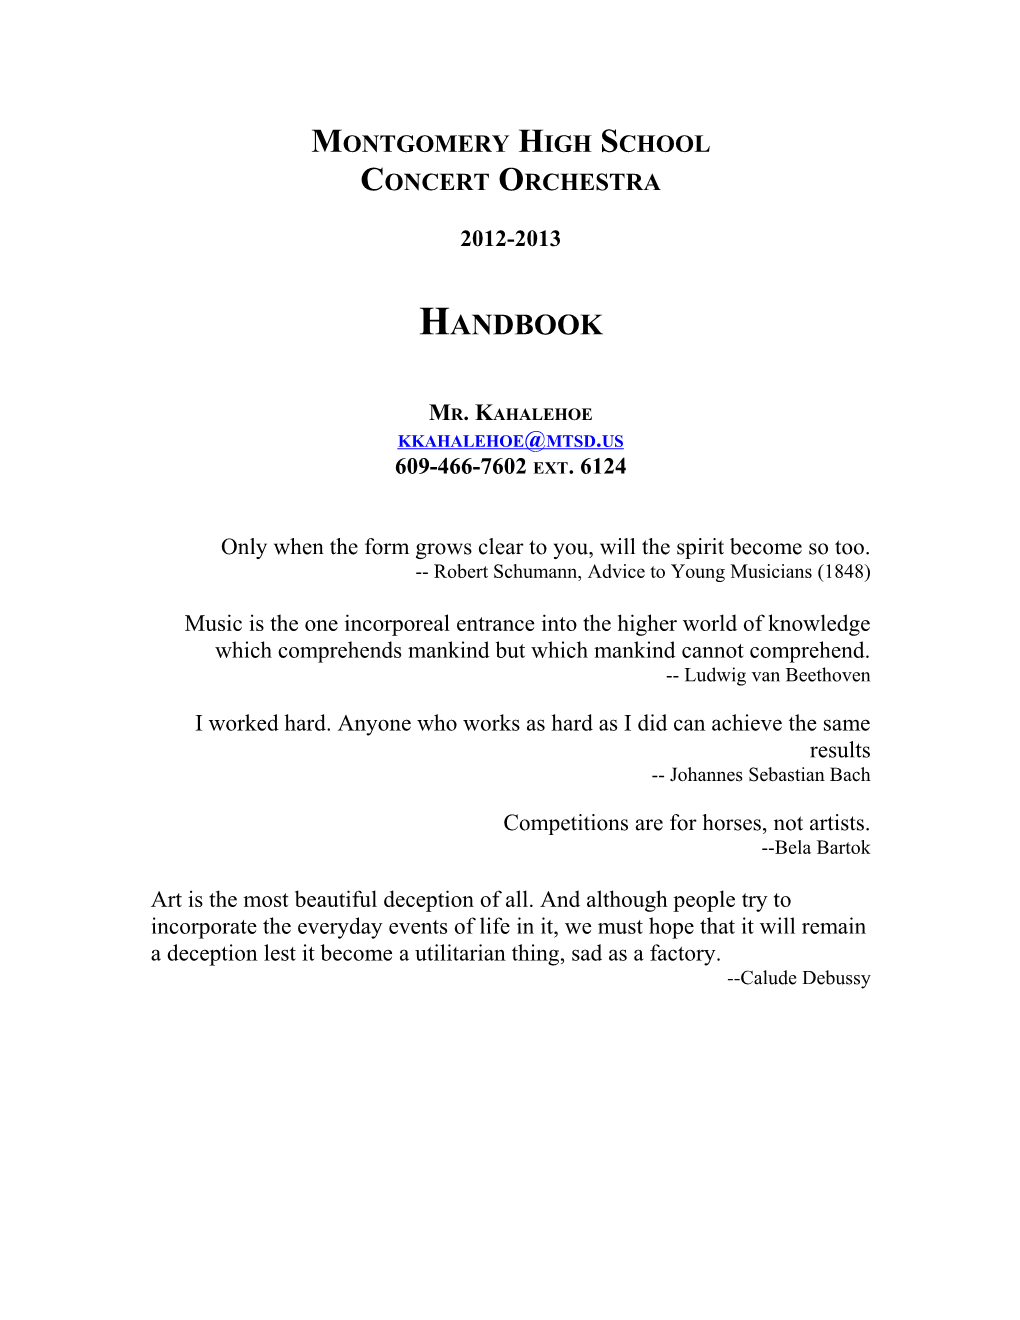 Symphonic Band Handbook